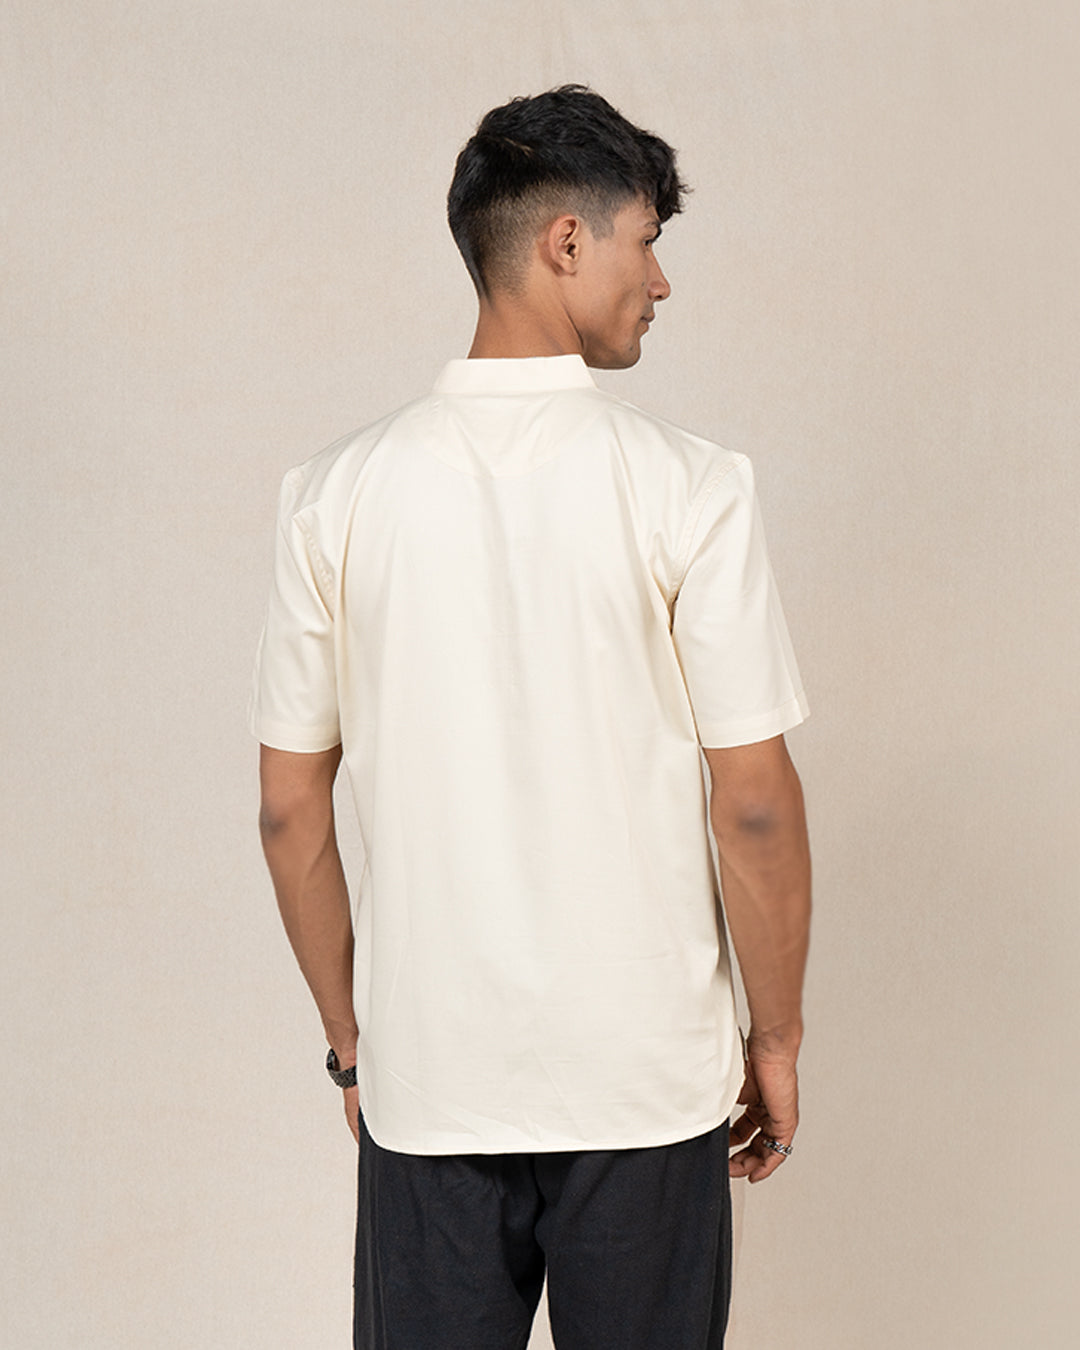 Modern stylish off white zipper front shirt for men, Stylish and functional zipper front shirt for men, combining modern design with comfort